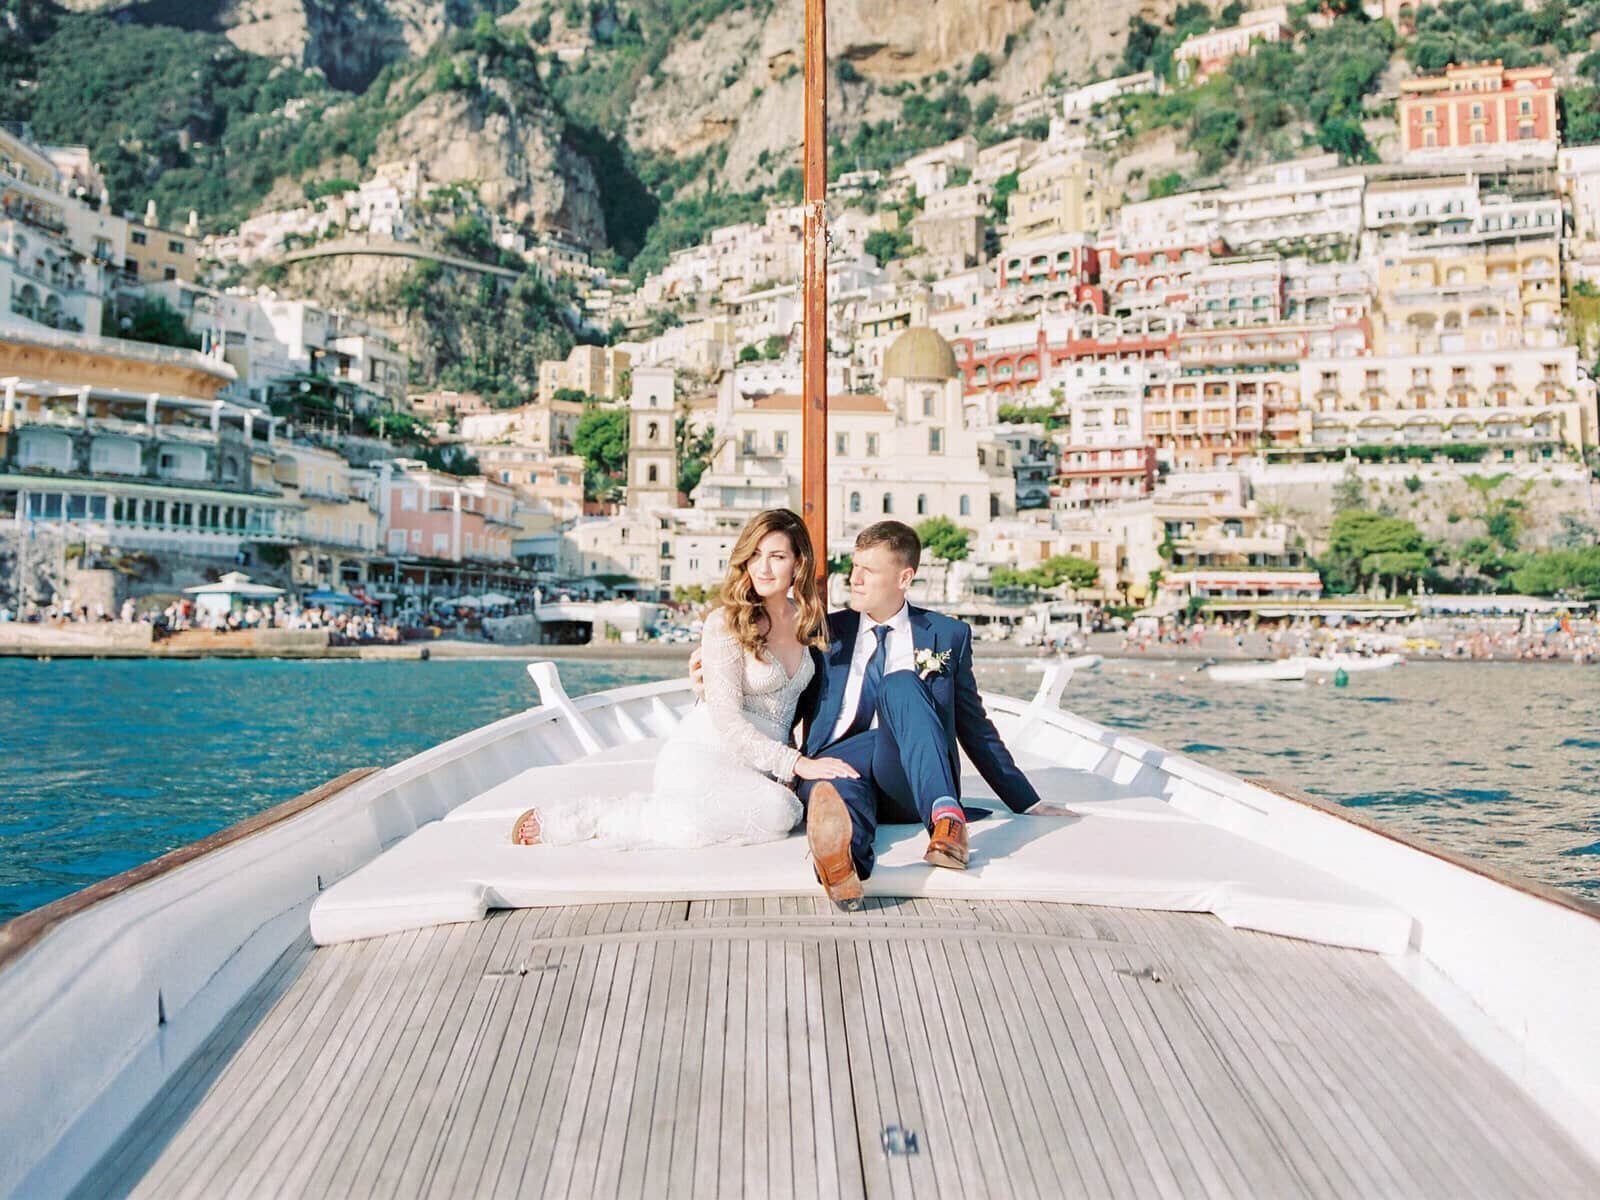 Bride and groom wedding day boat ride in positano